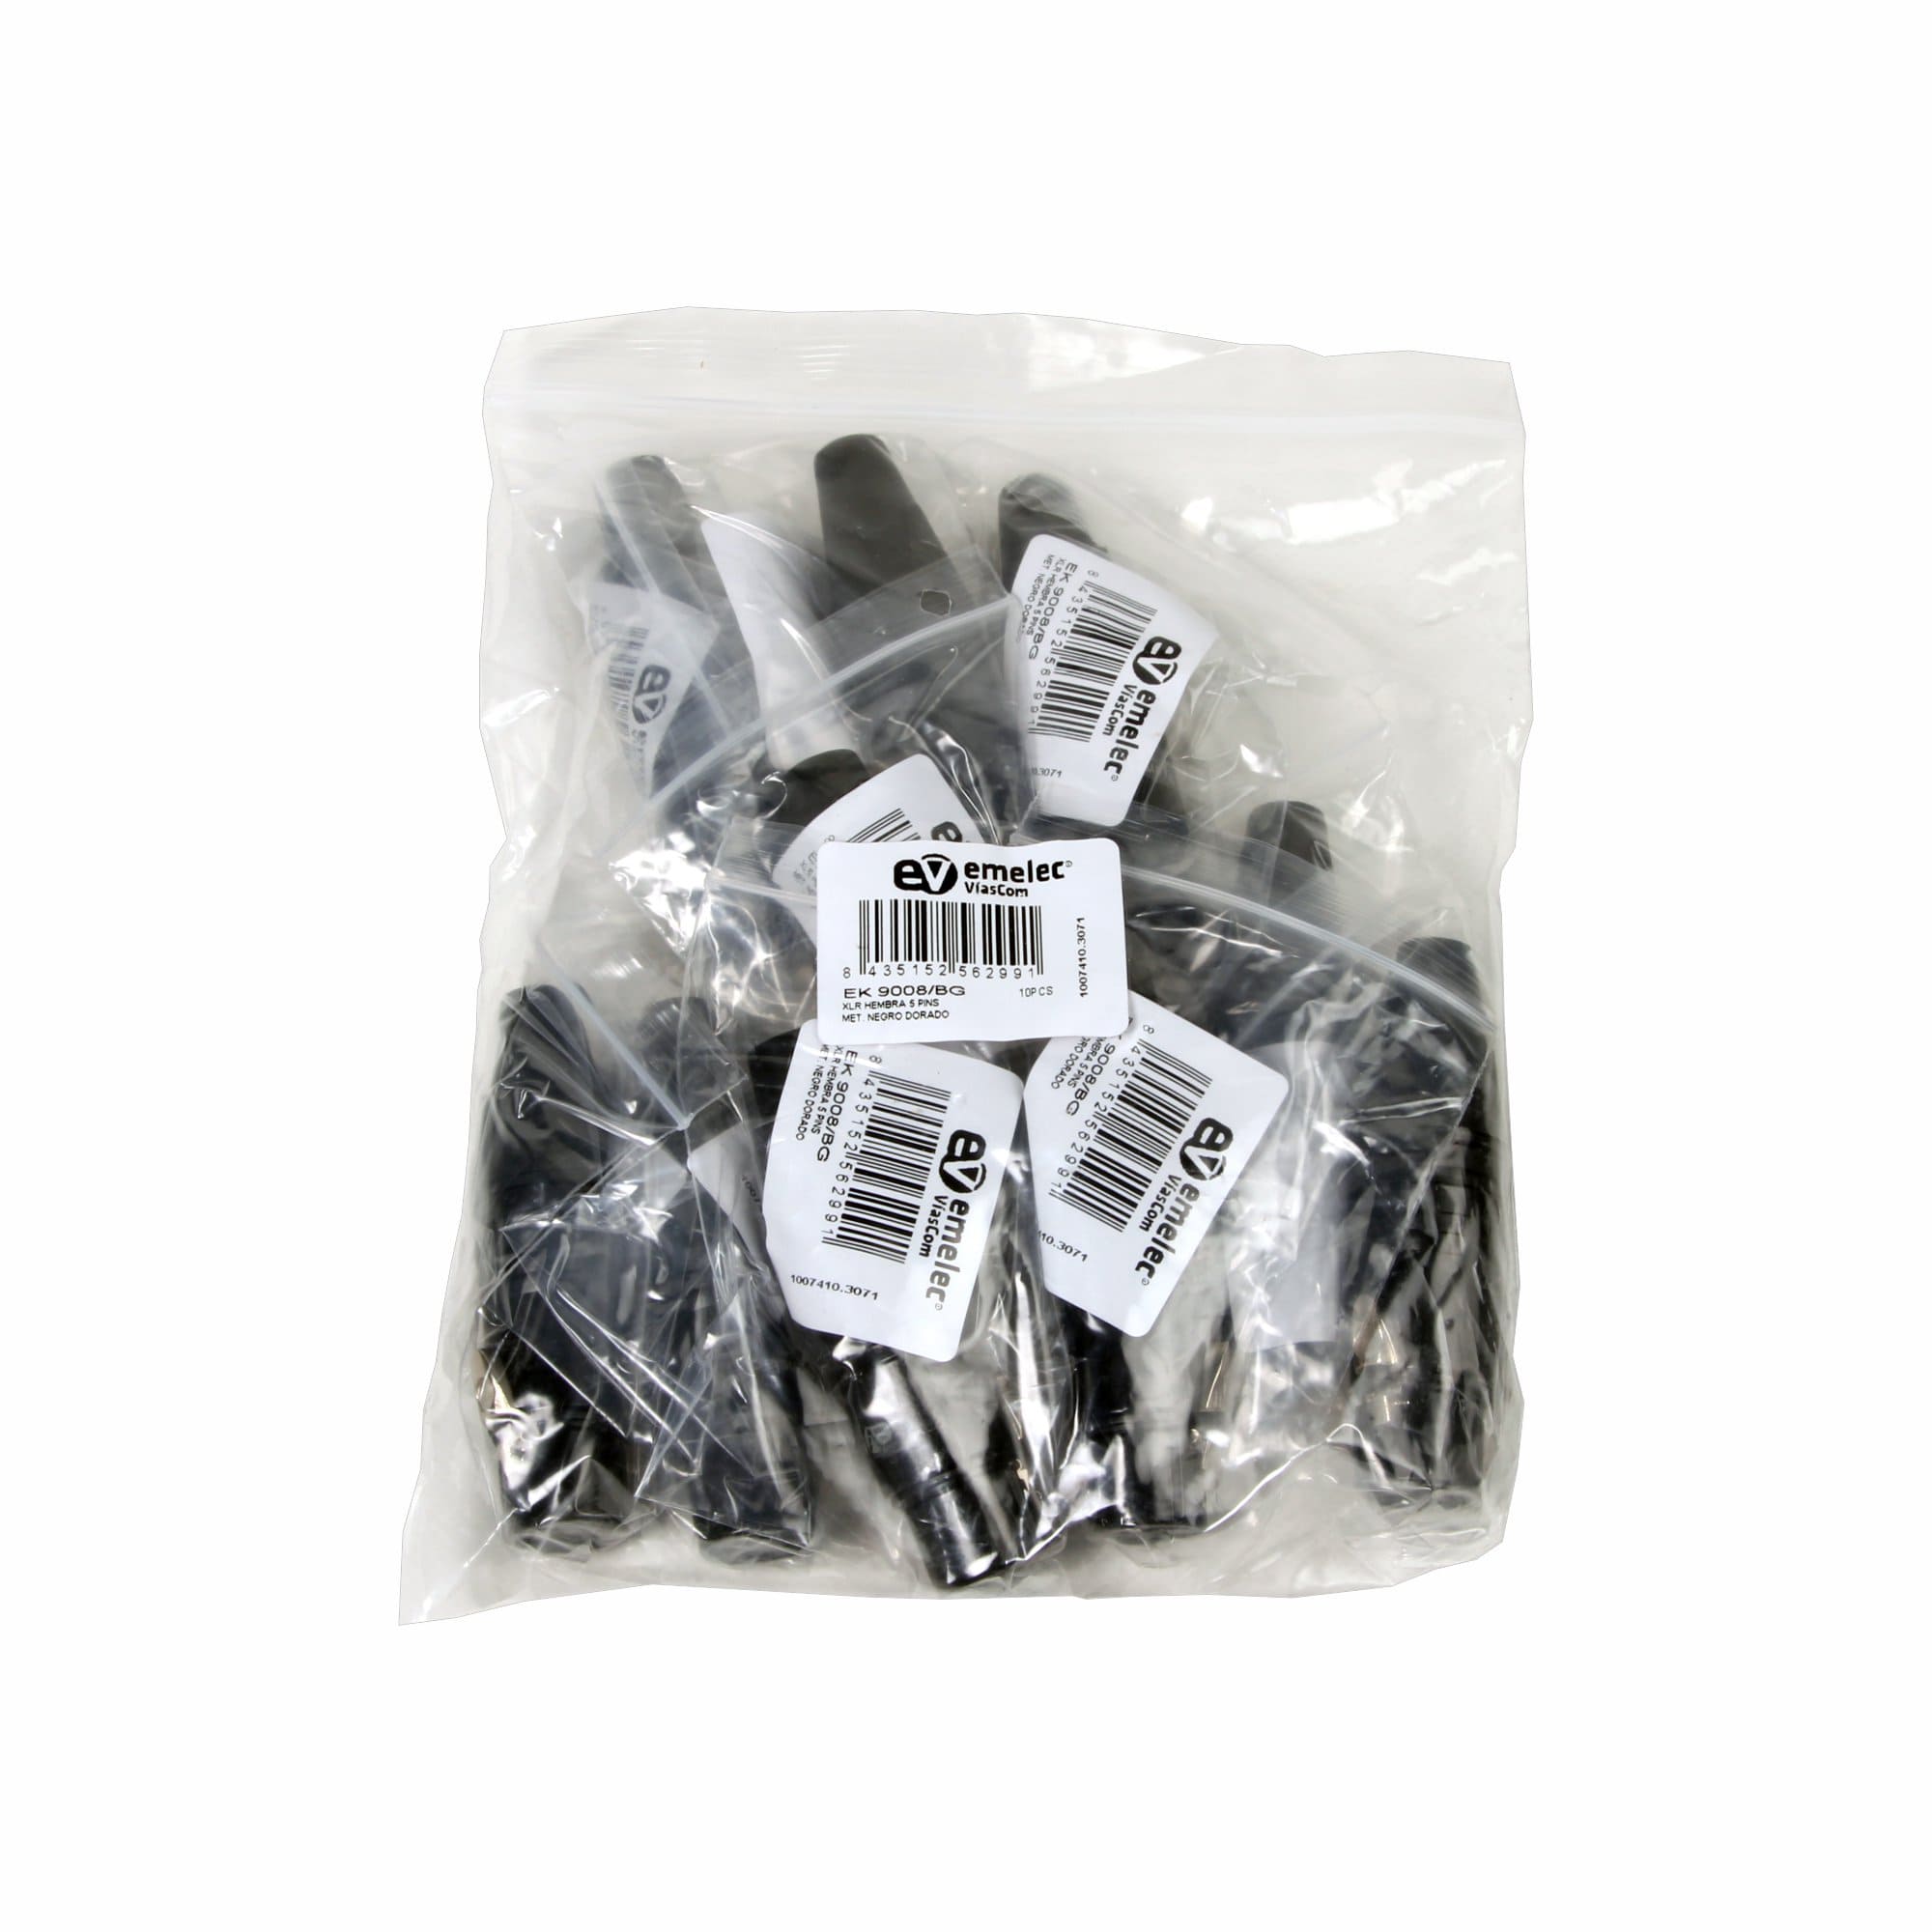 Plastic bag with 10 black 5-pin female XLR connectors from Emelec ViaCom